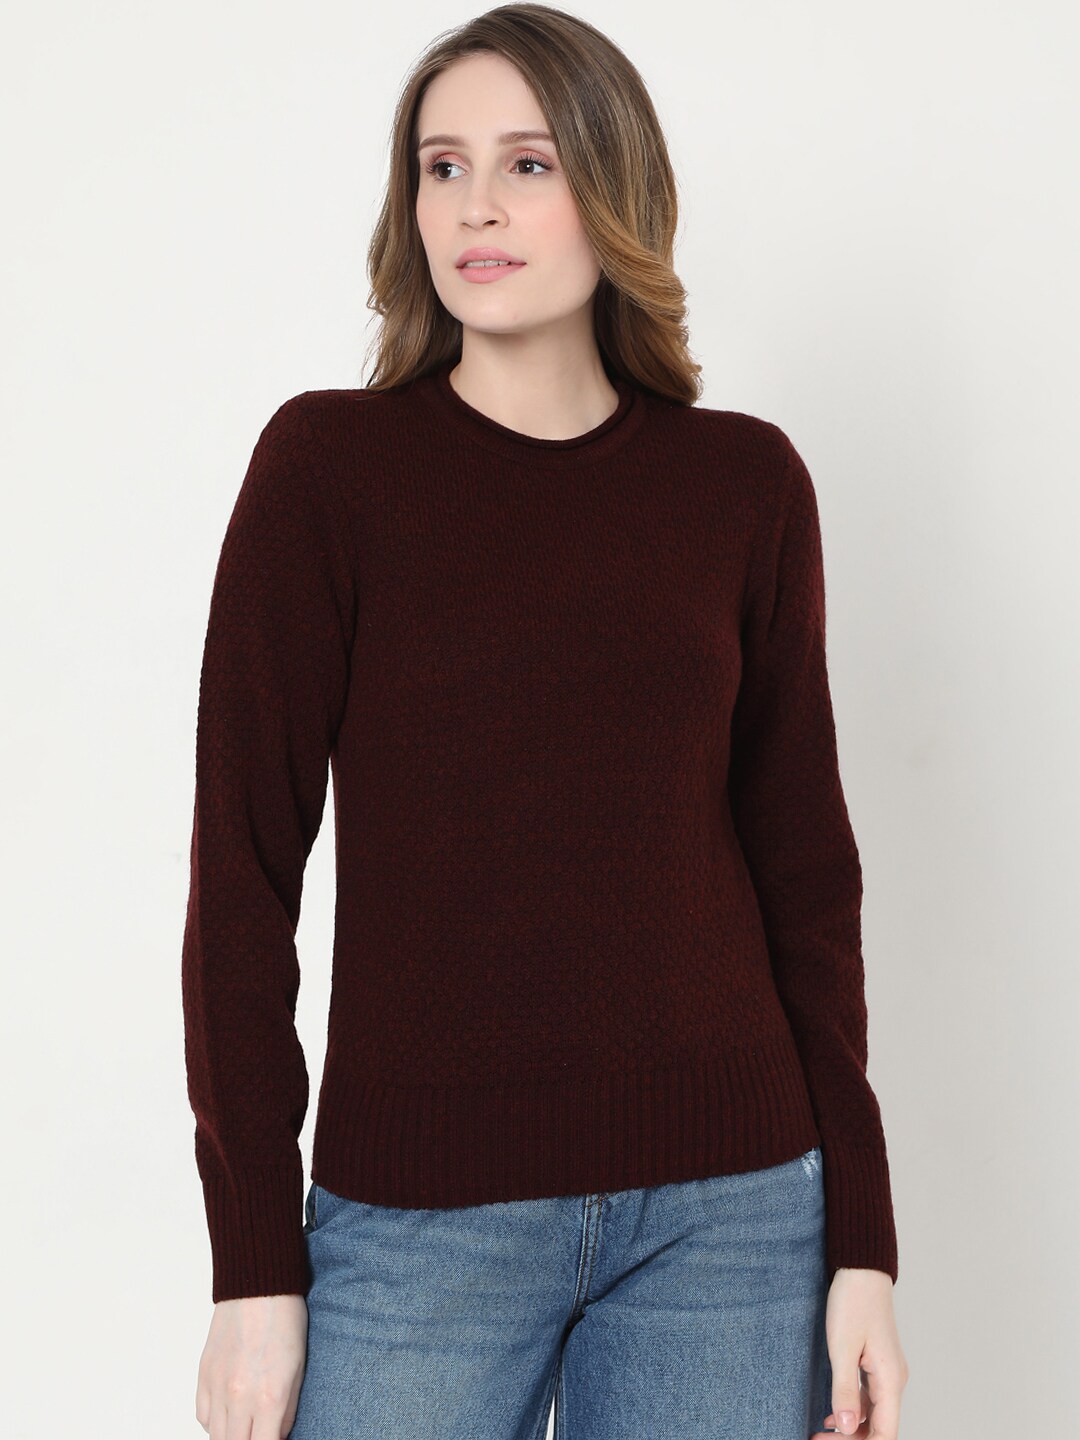 Vero Moda Women Burgundy Self Design Pullover Sweater Price in India